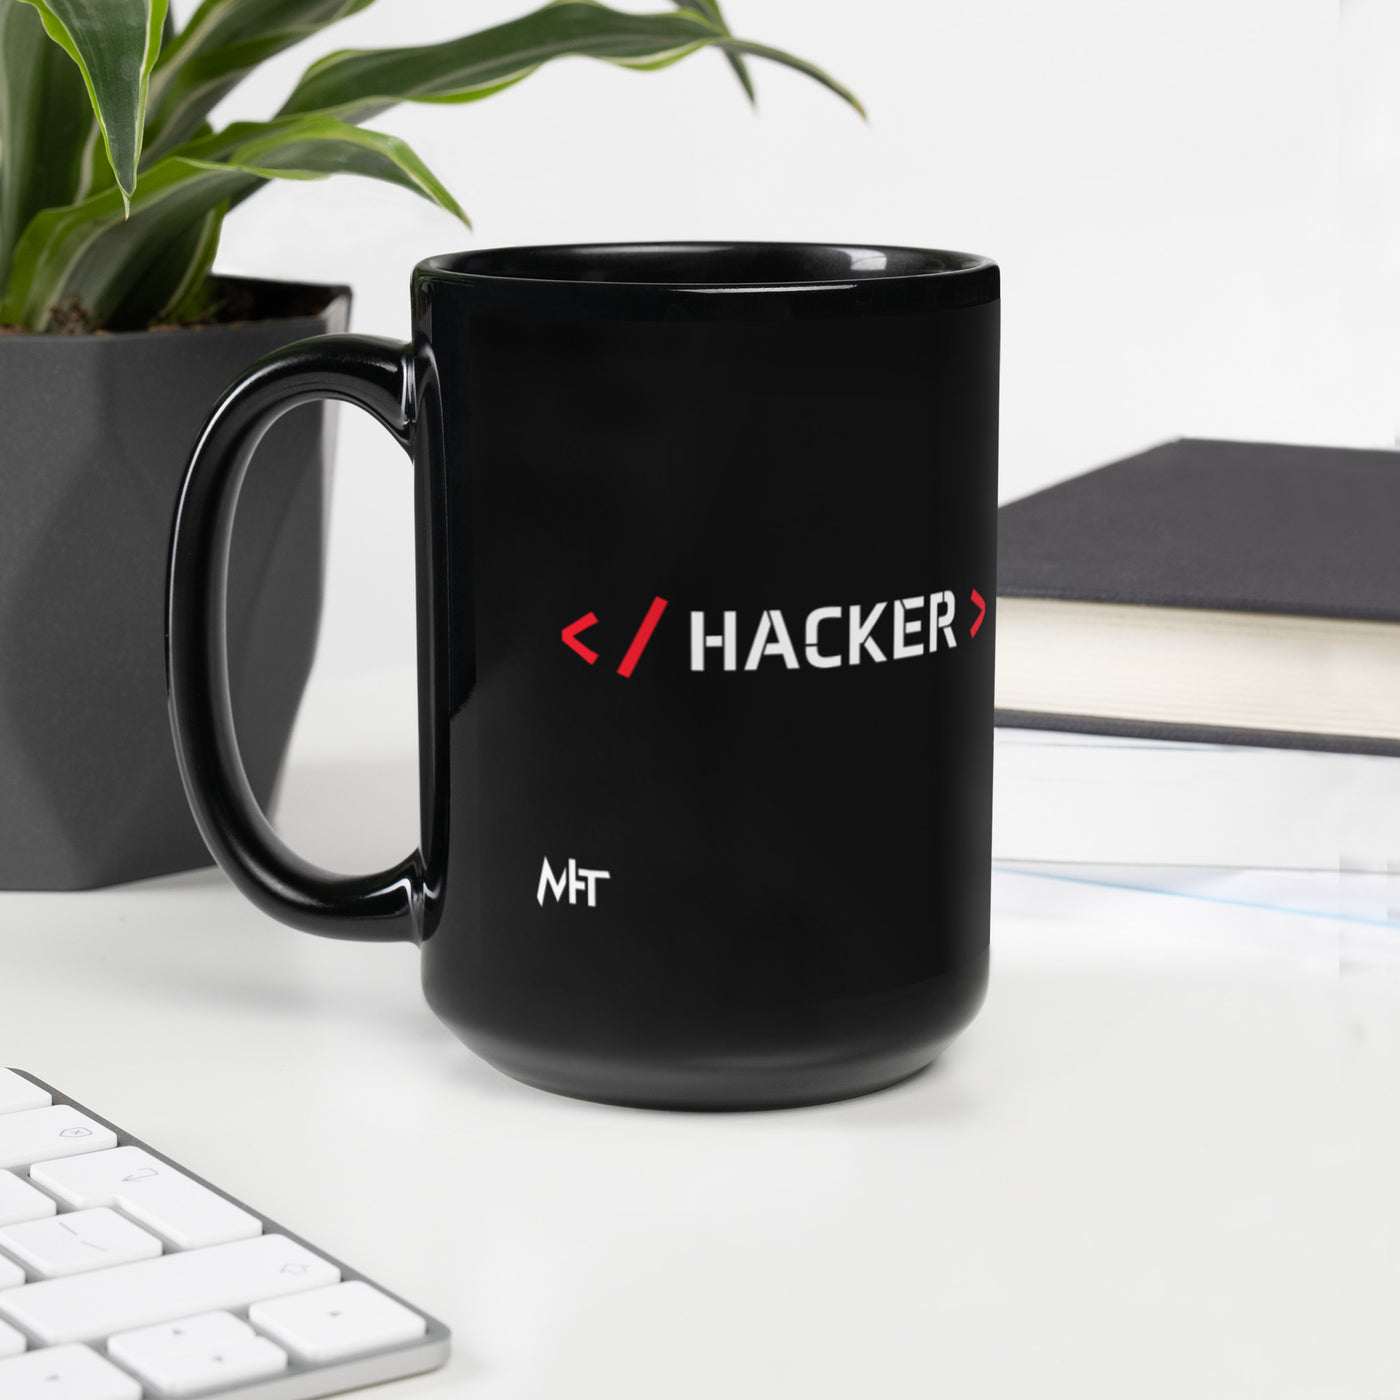 Hacker - Black Glossy Mug